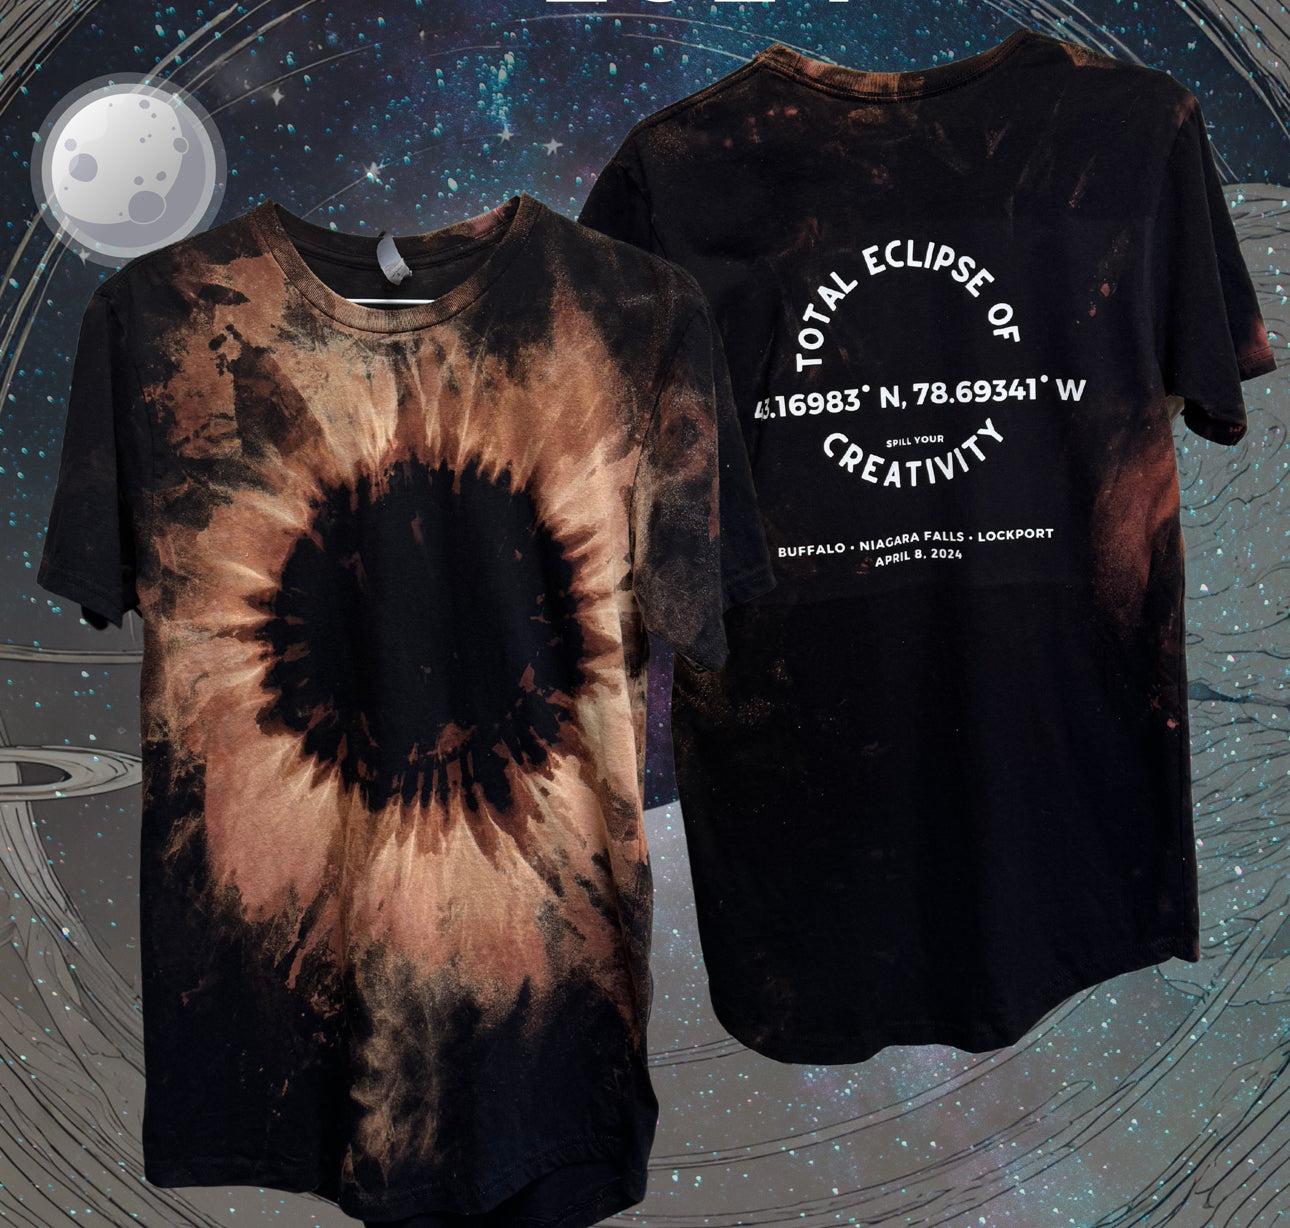 Solar Eclipse Shirts